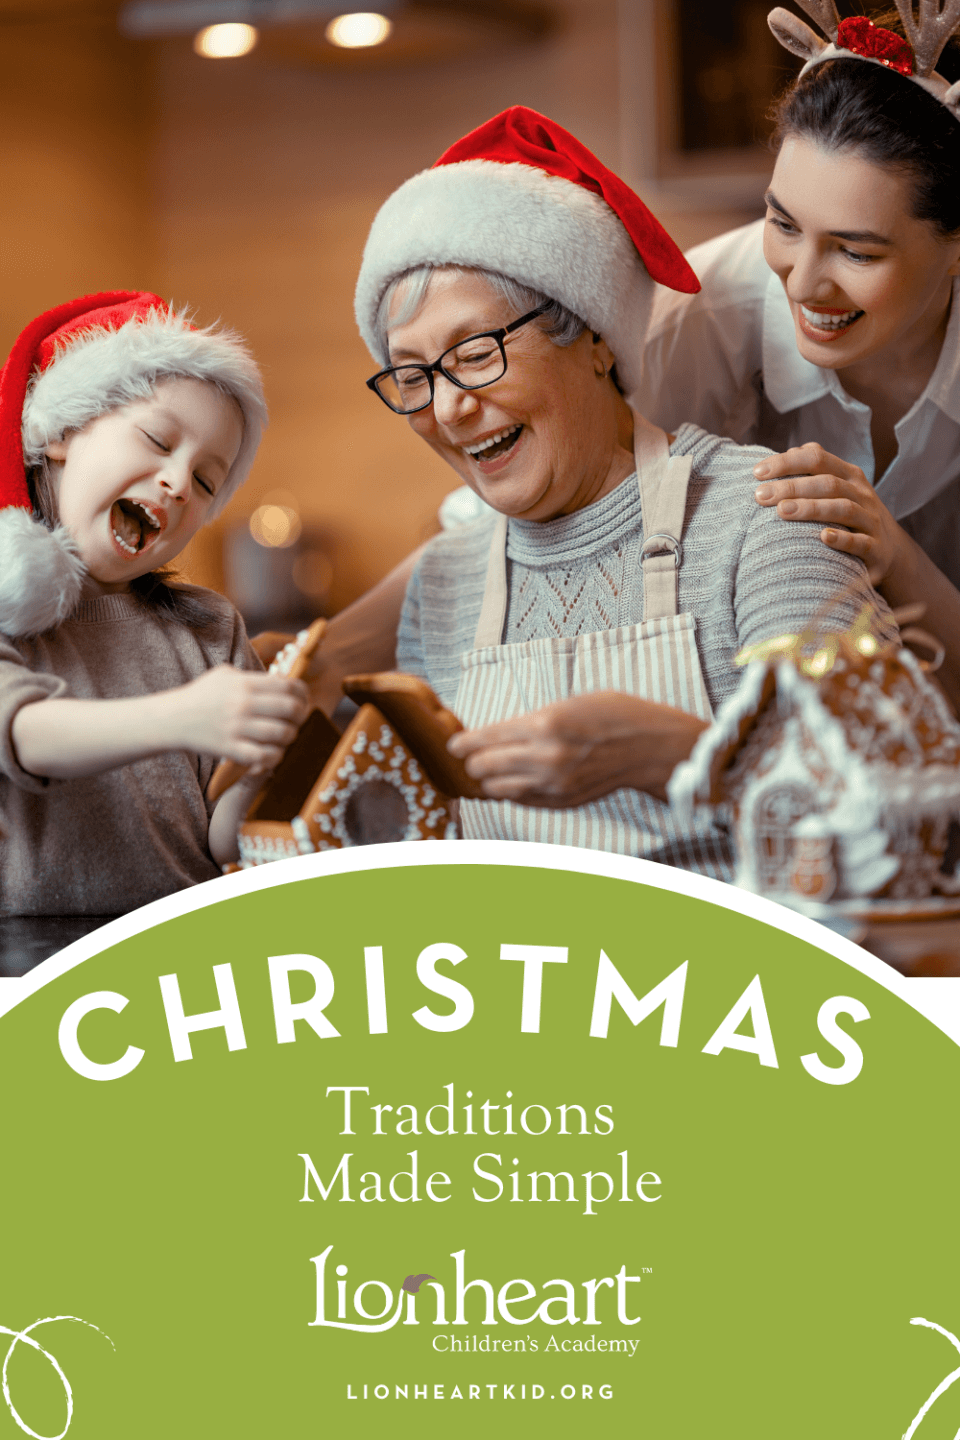 Three generations enjoying Christmas traditions